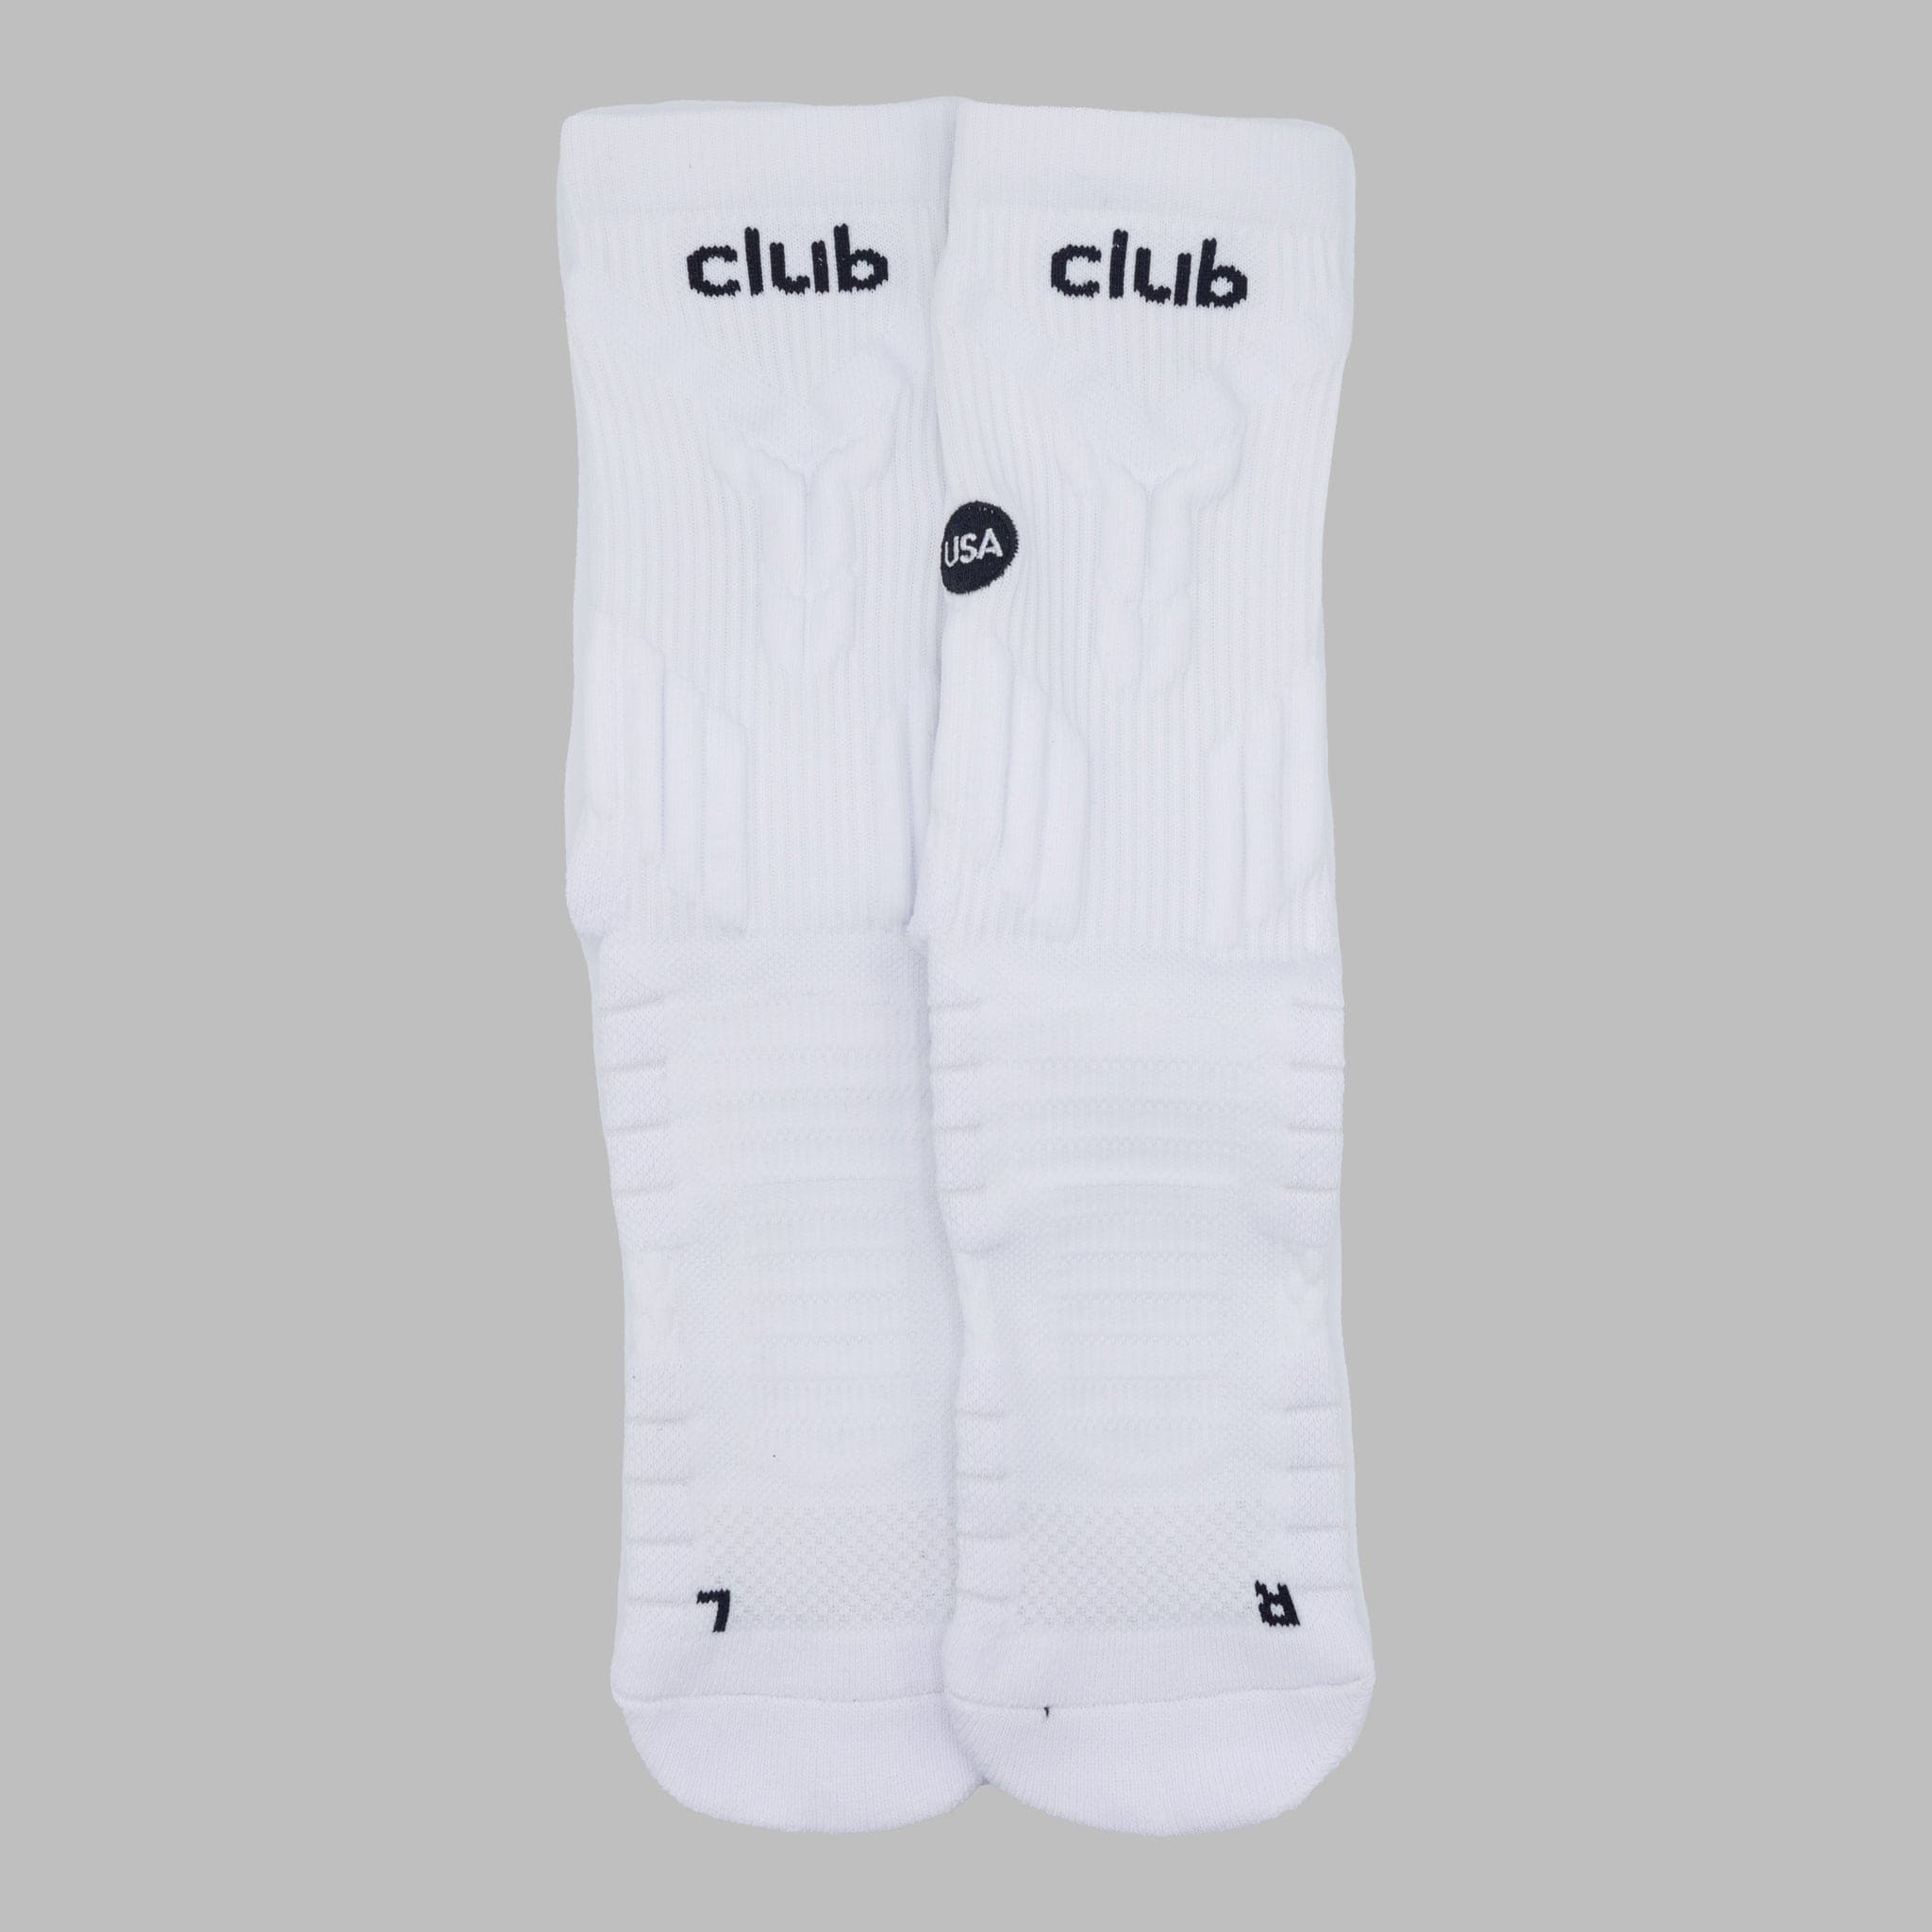 Club Performance Socks